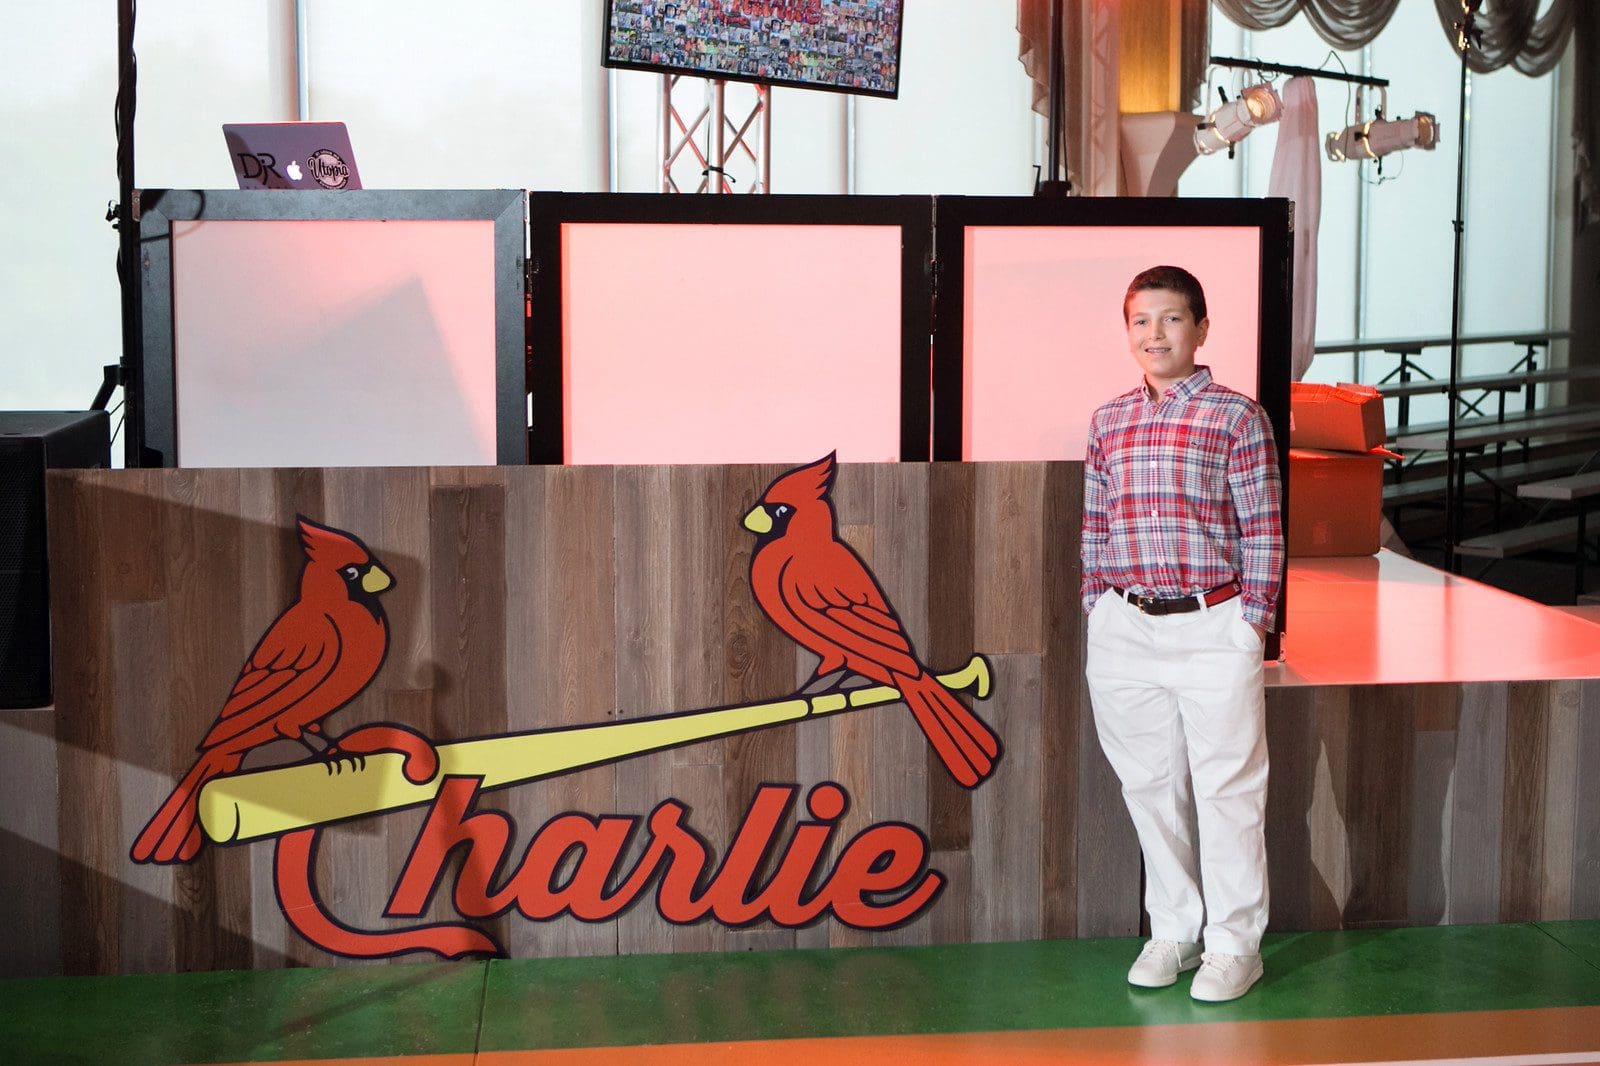 Charlie As A Cardinal Logo